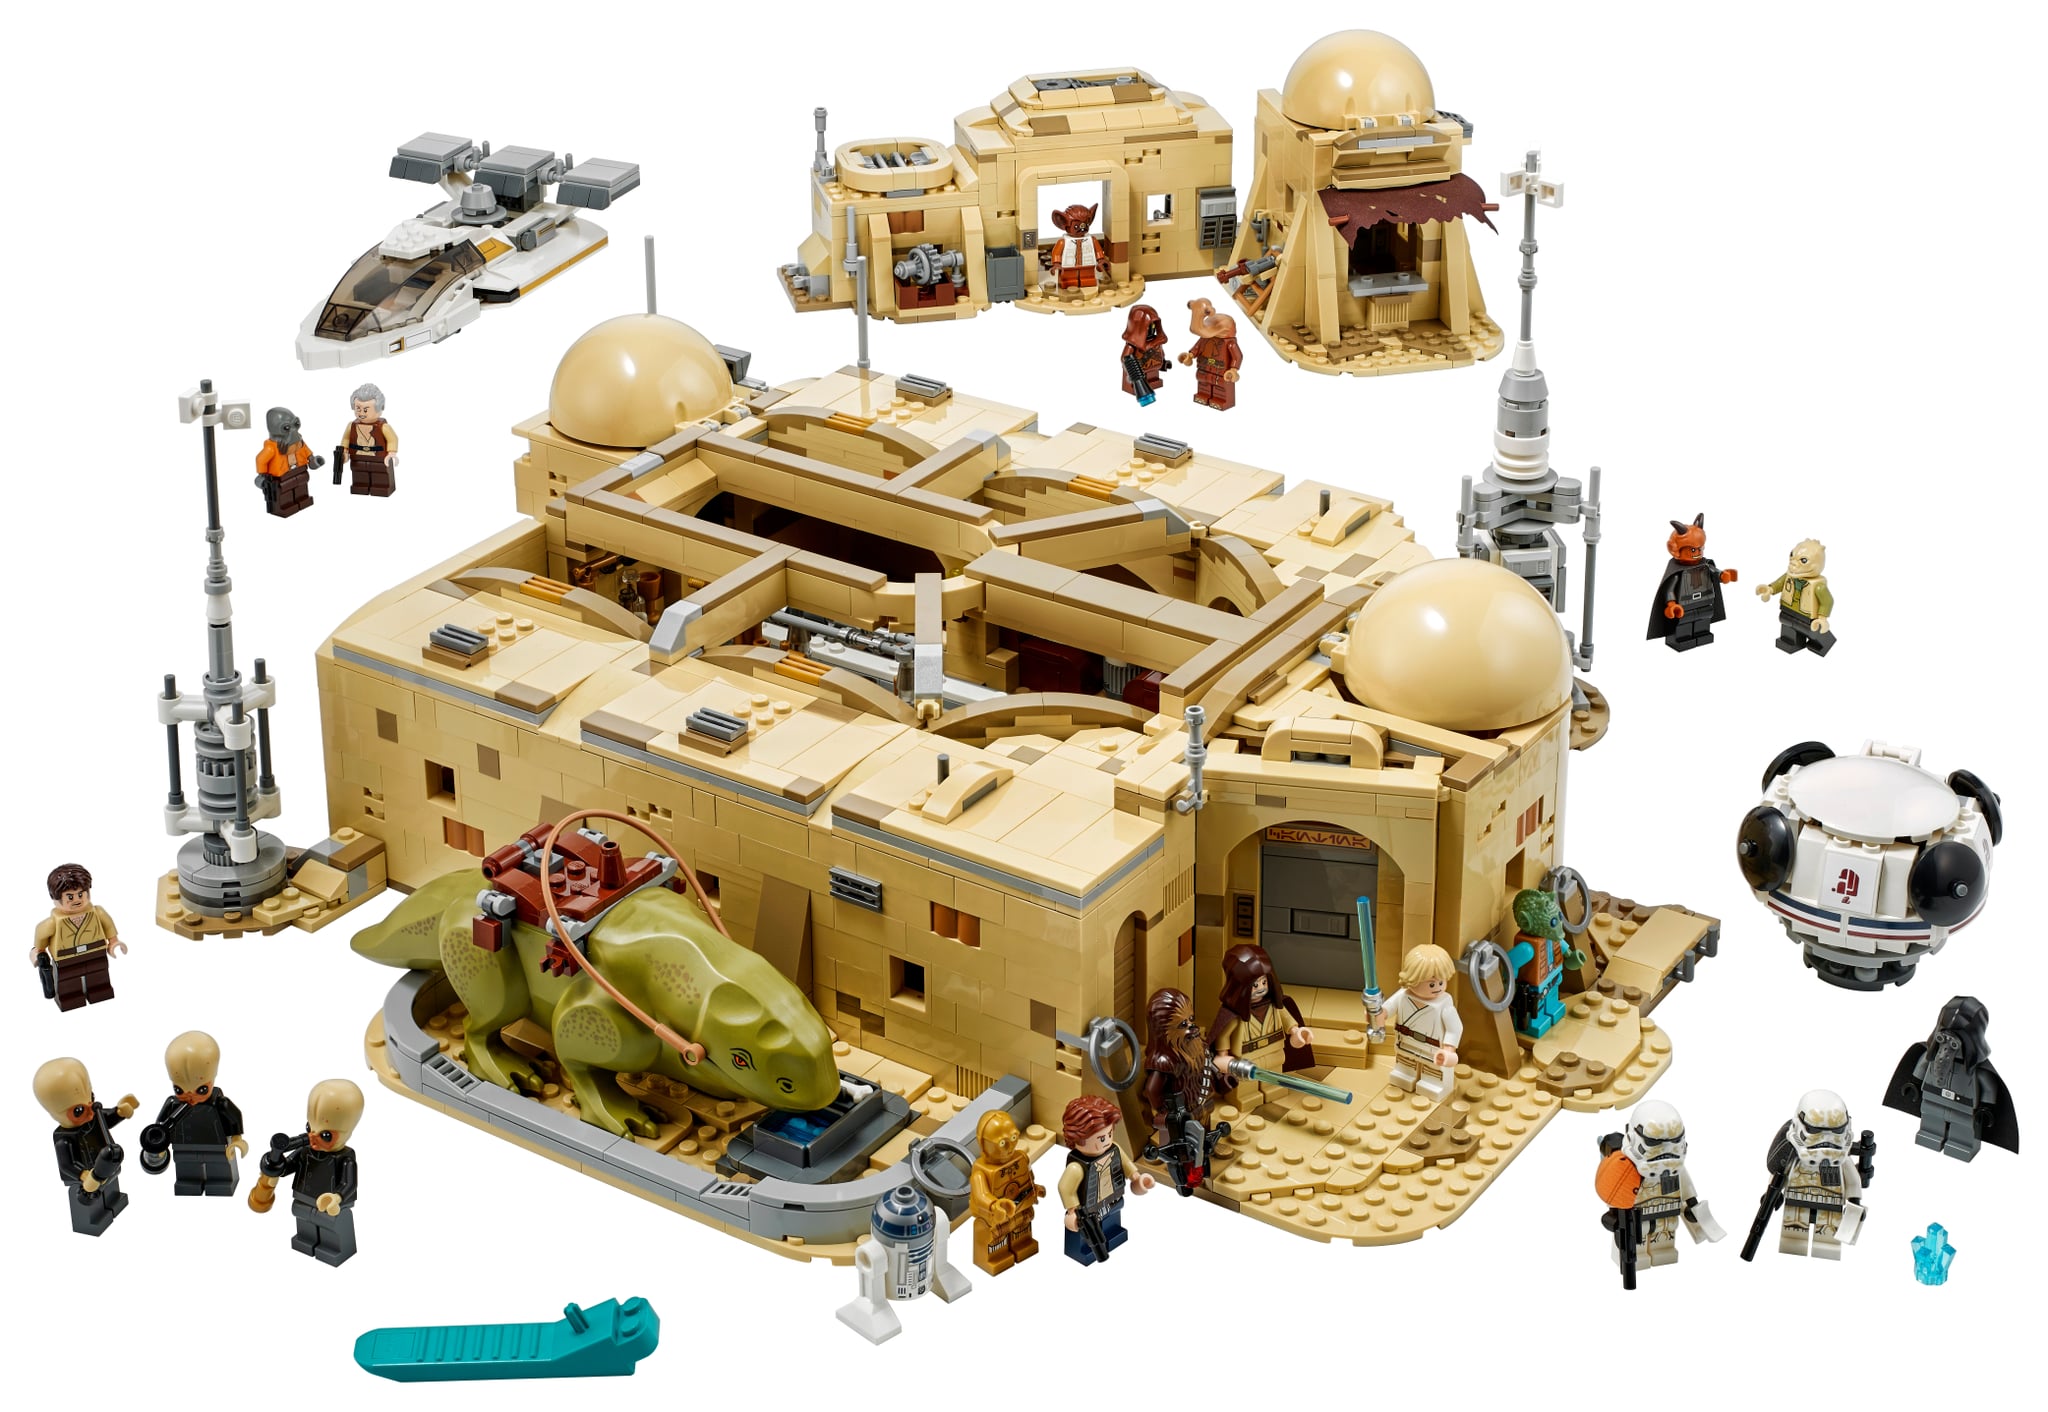 Lego Star Wars Mos Eisley Cantina